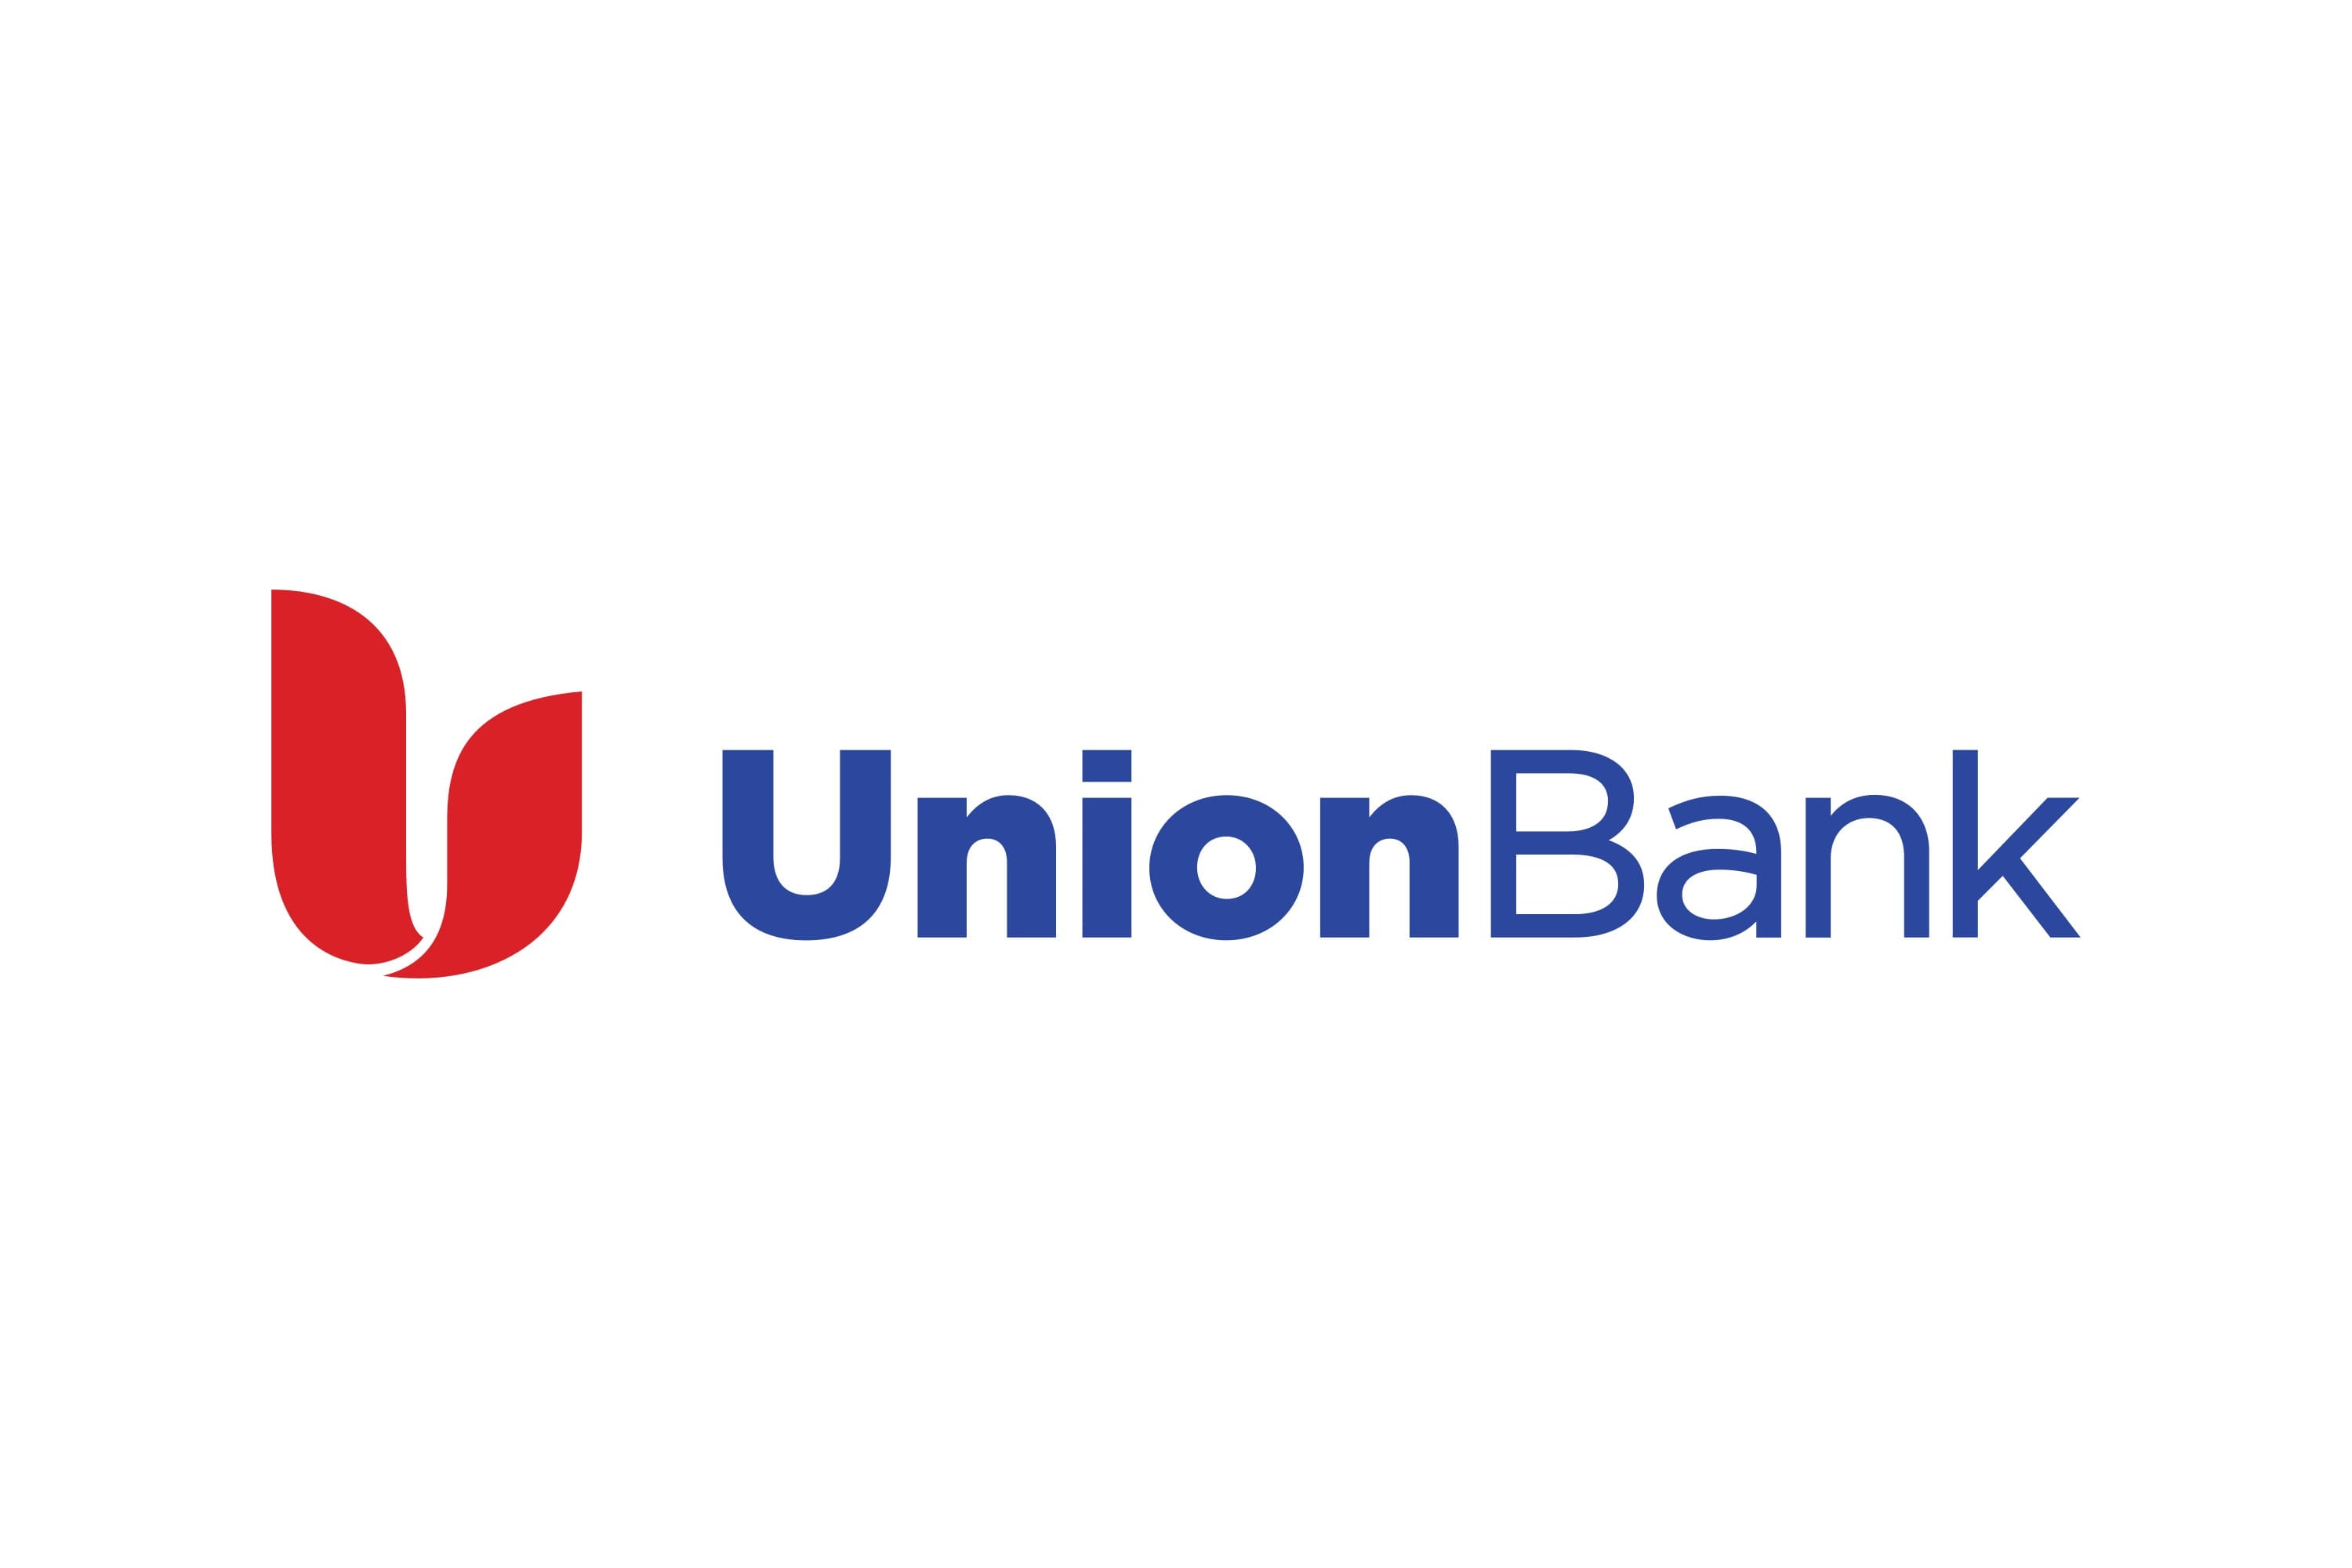 Union Bank Logo - MUFG Union Bank Logo and symbol ...